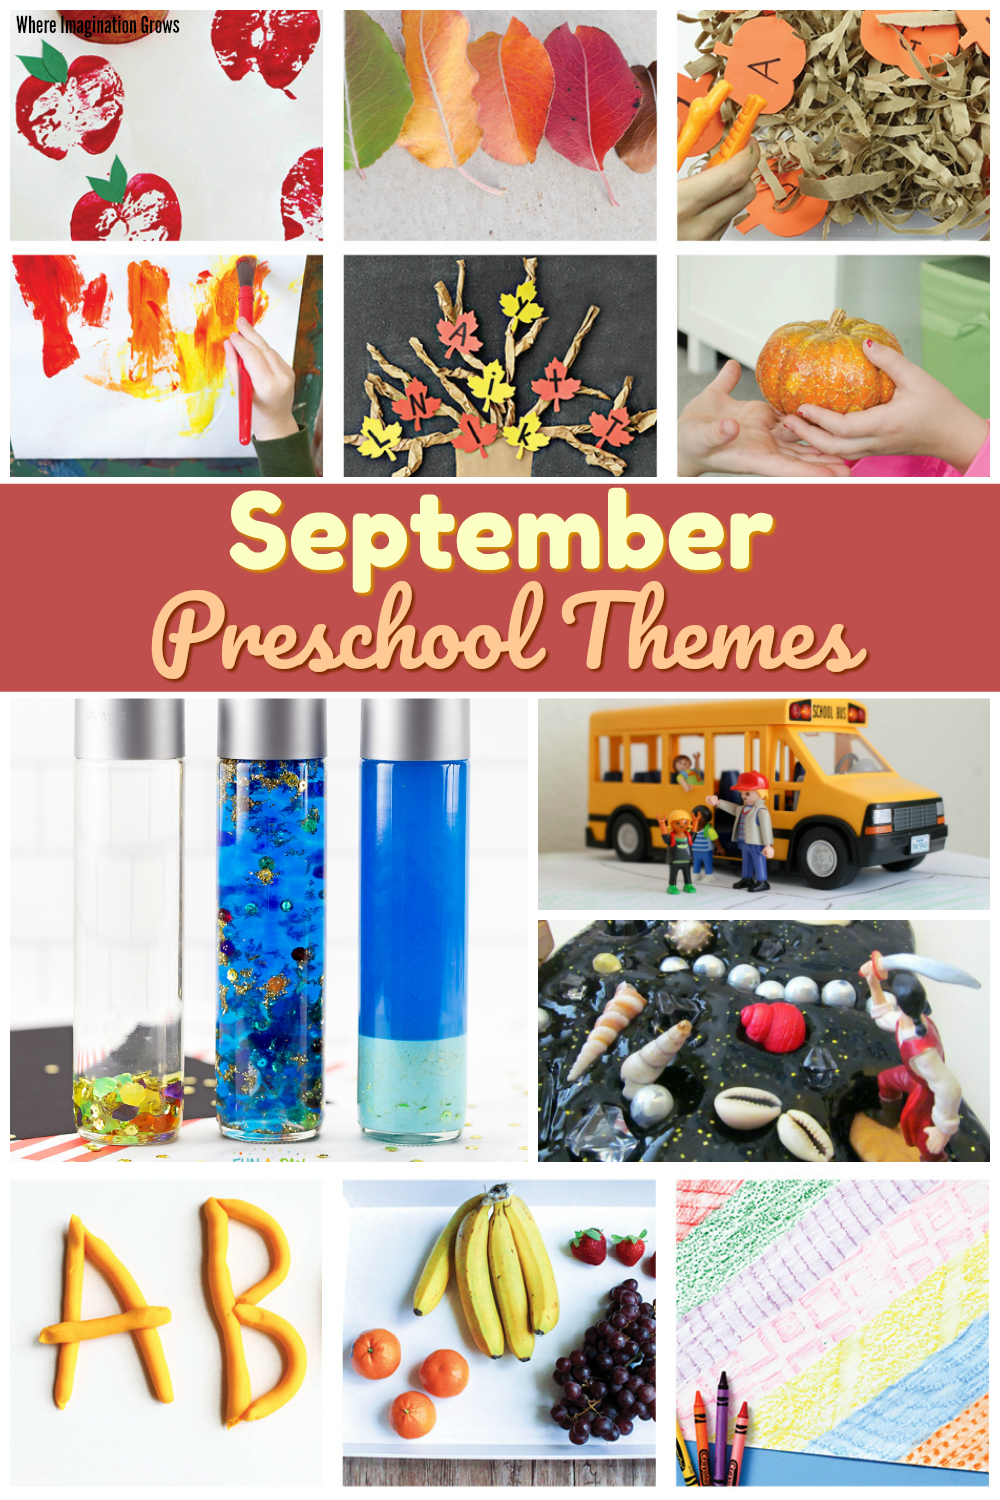 September Preschool Themes